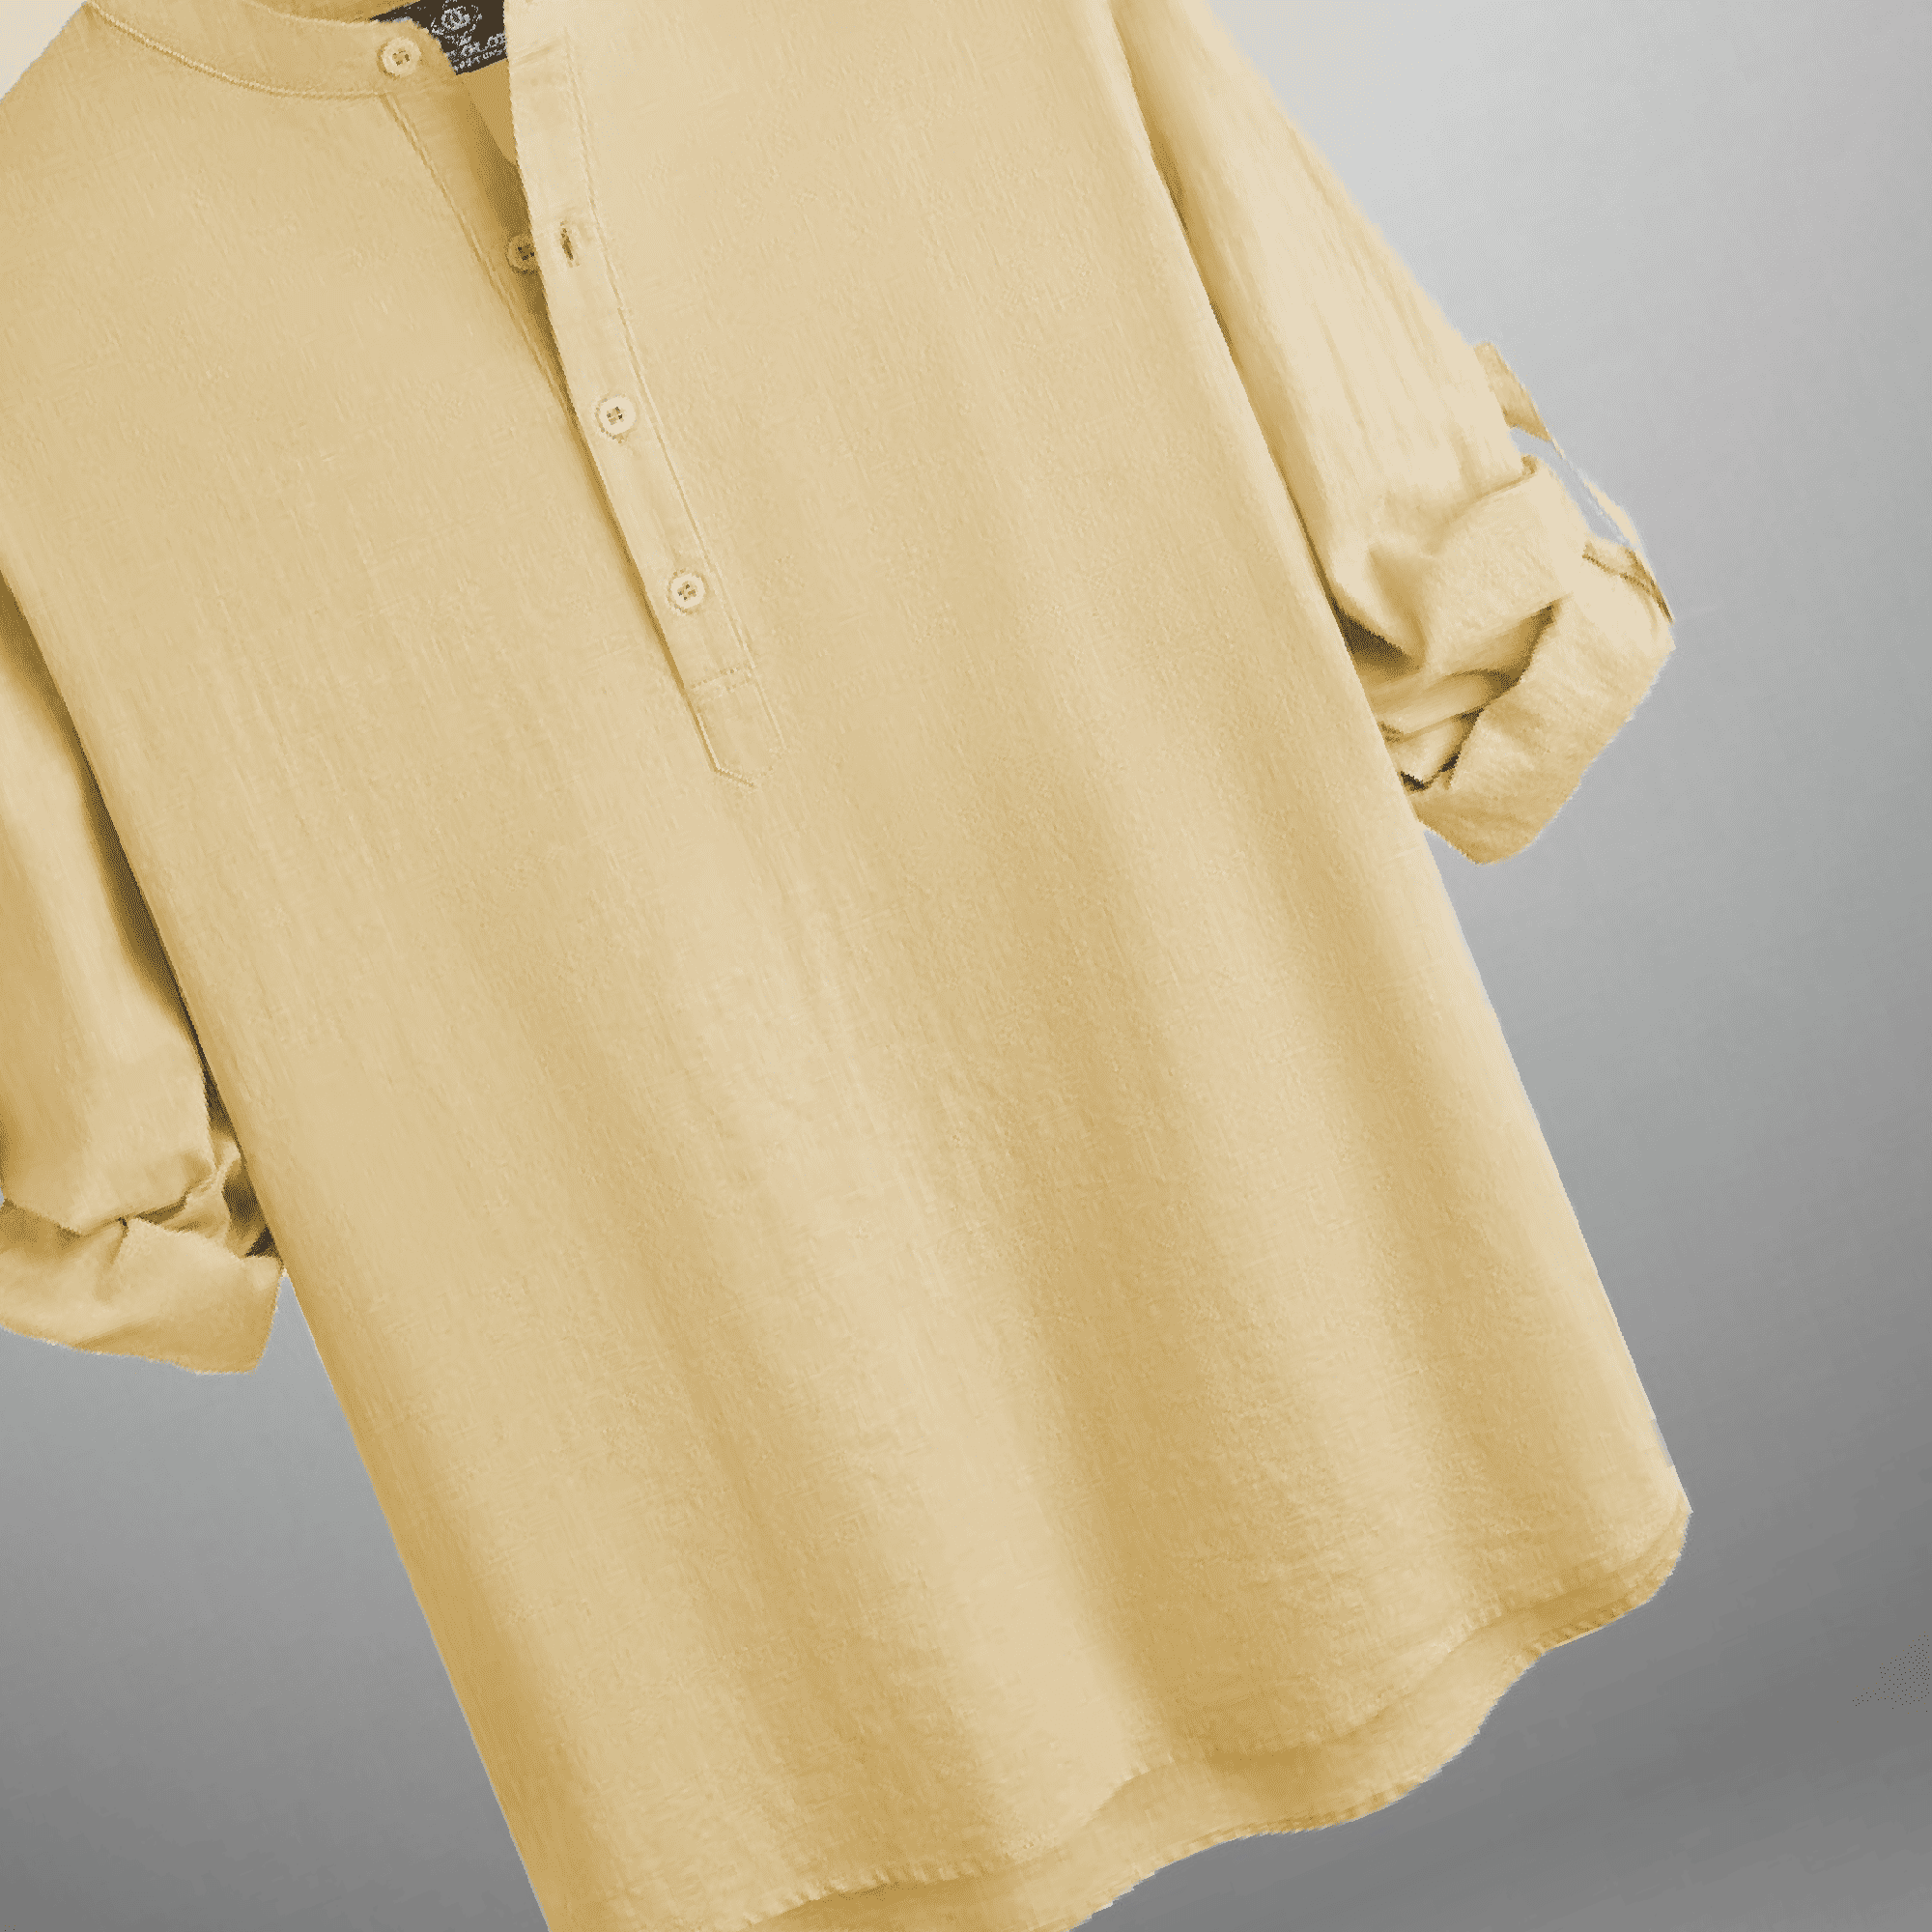 Men's light yellow full sleeve kurta style shirt-RMS004